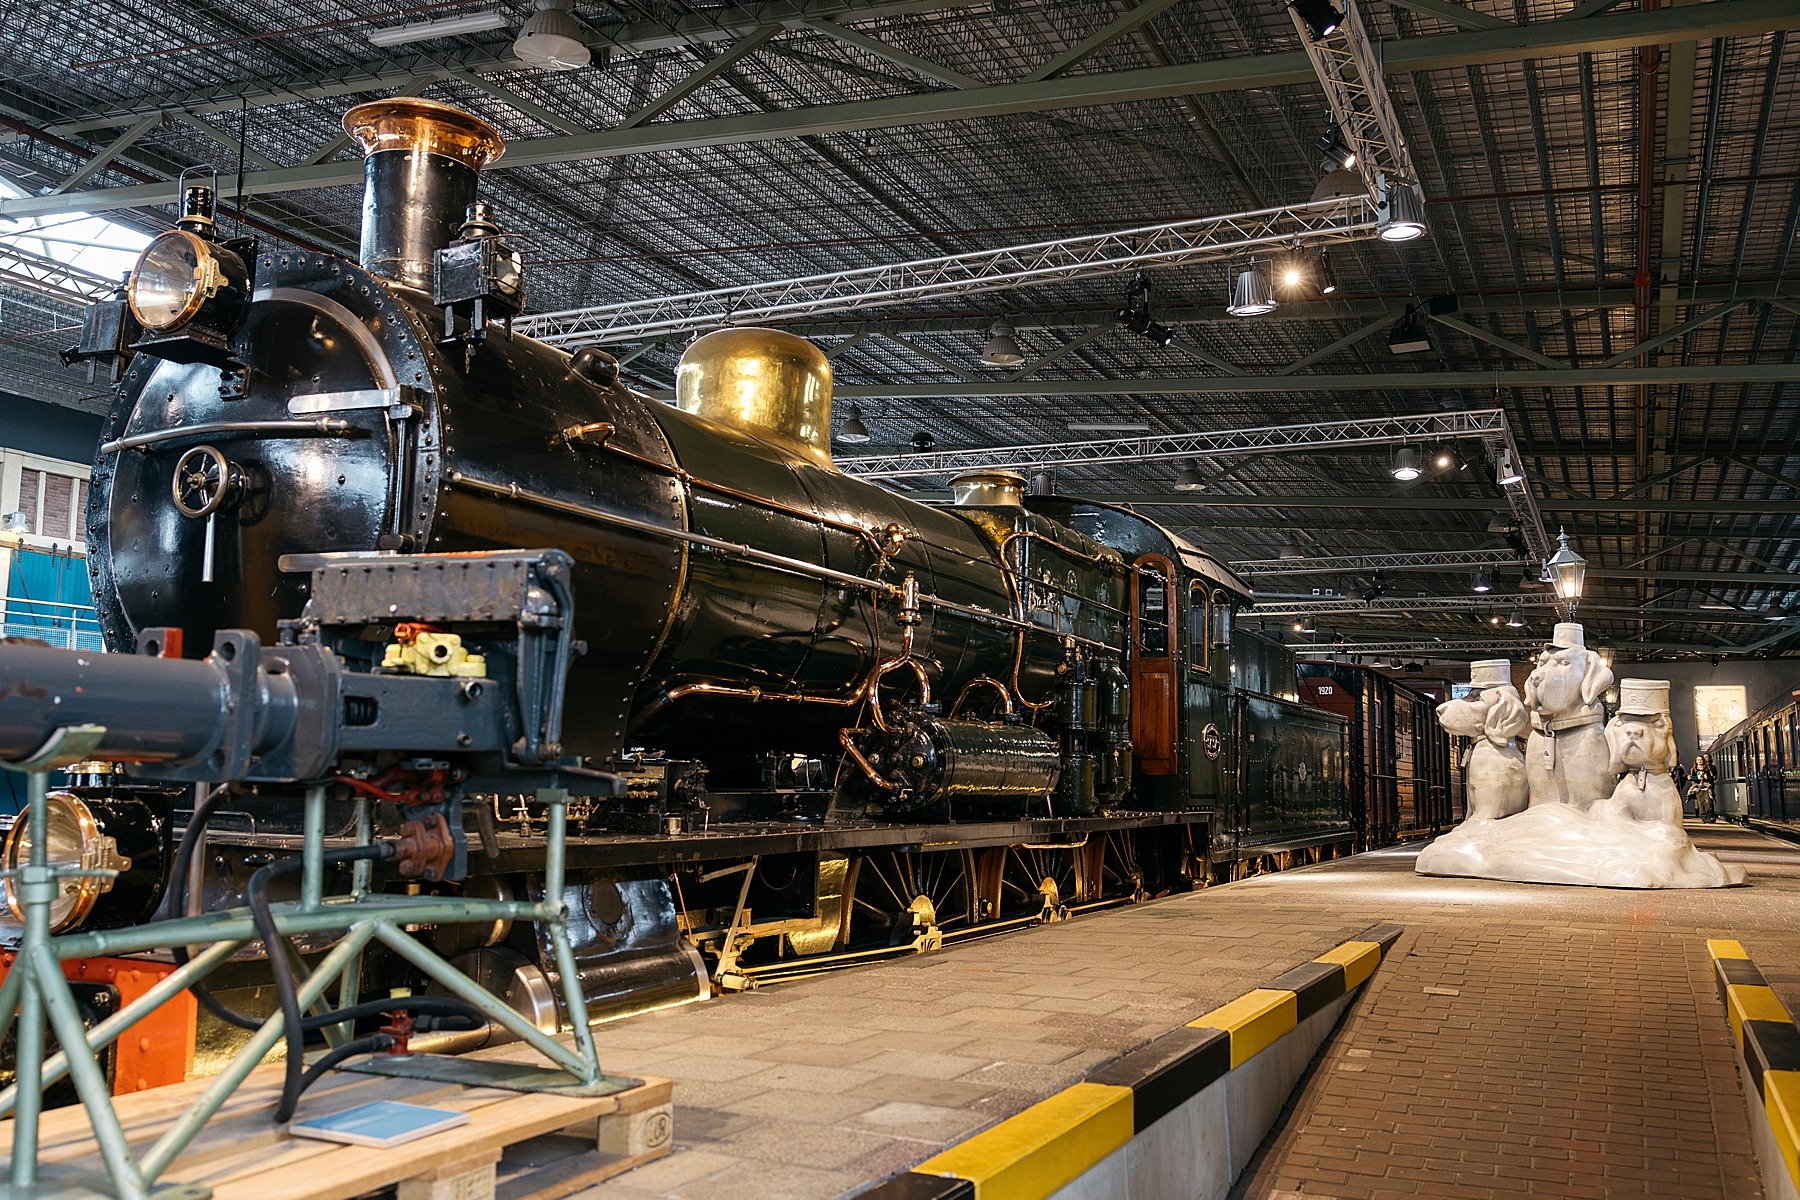 Spoorwegmuseum, l'incroyable musée du train de Utrecht 46